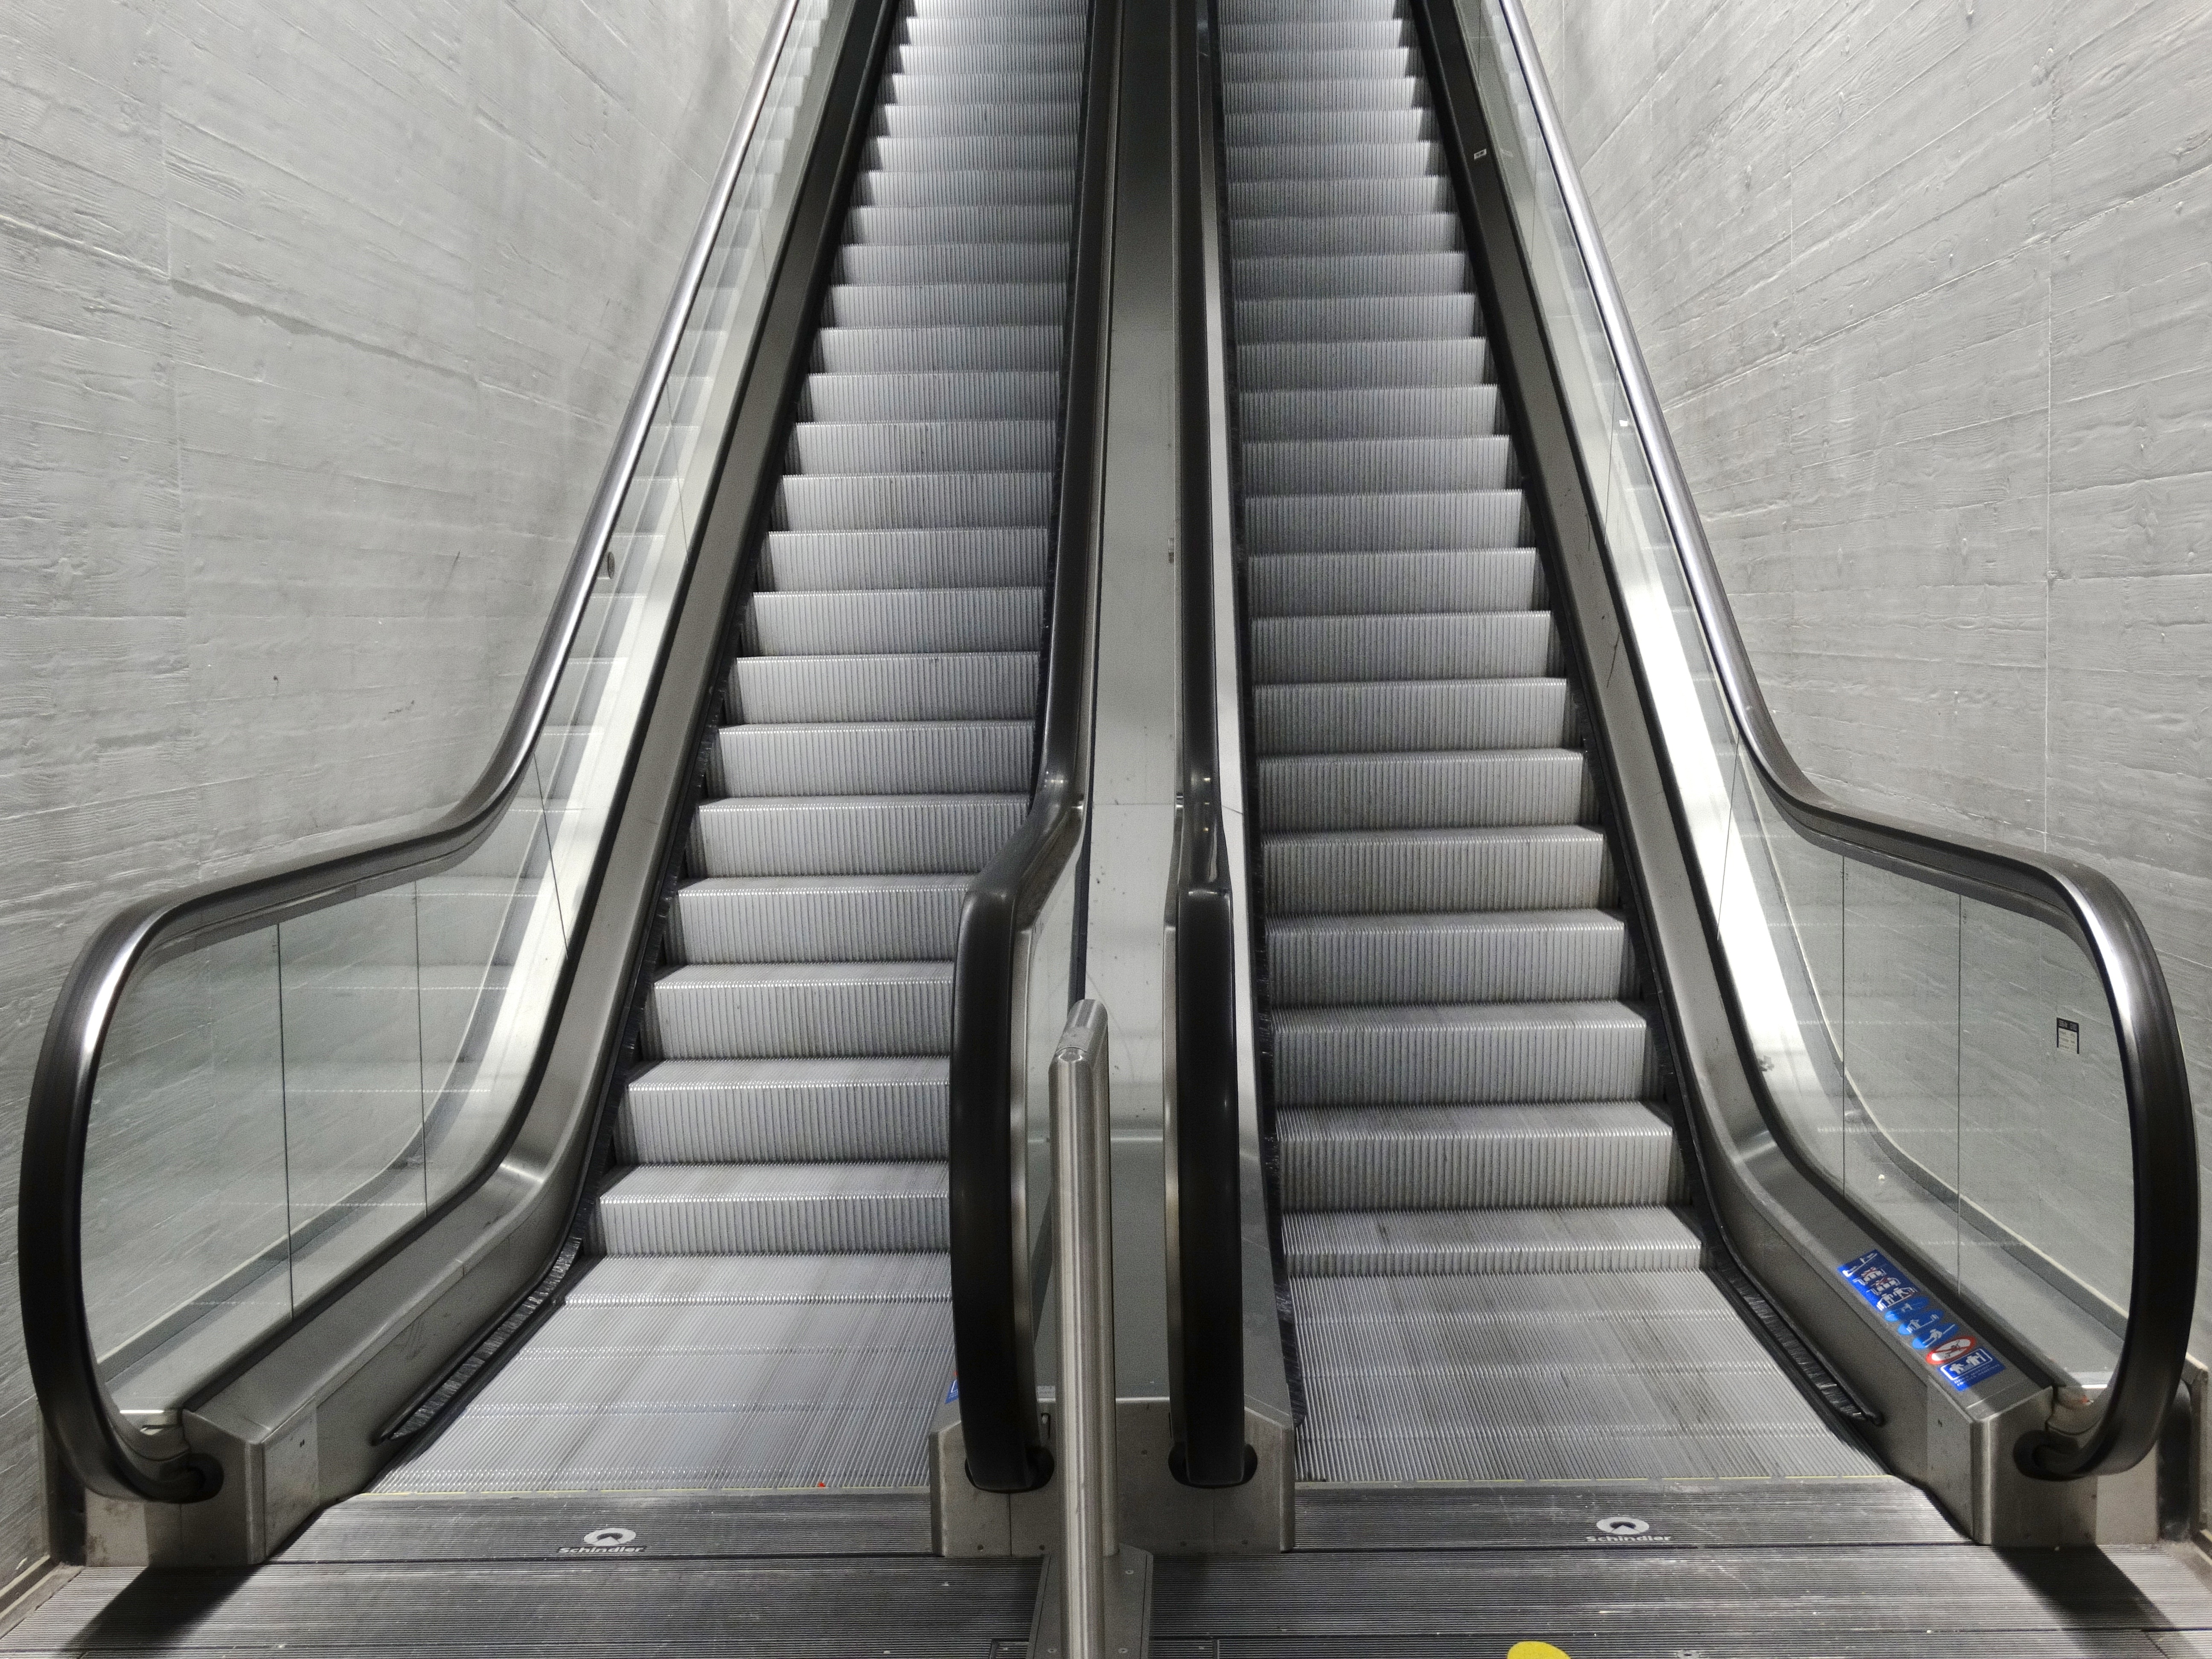 2 silver escalators